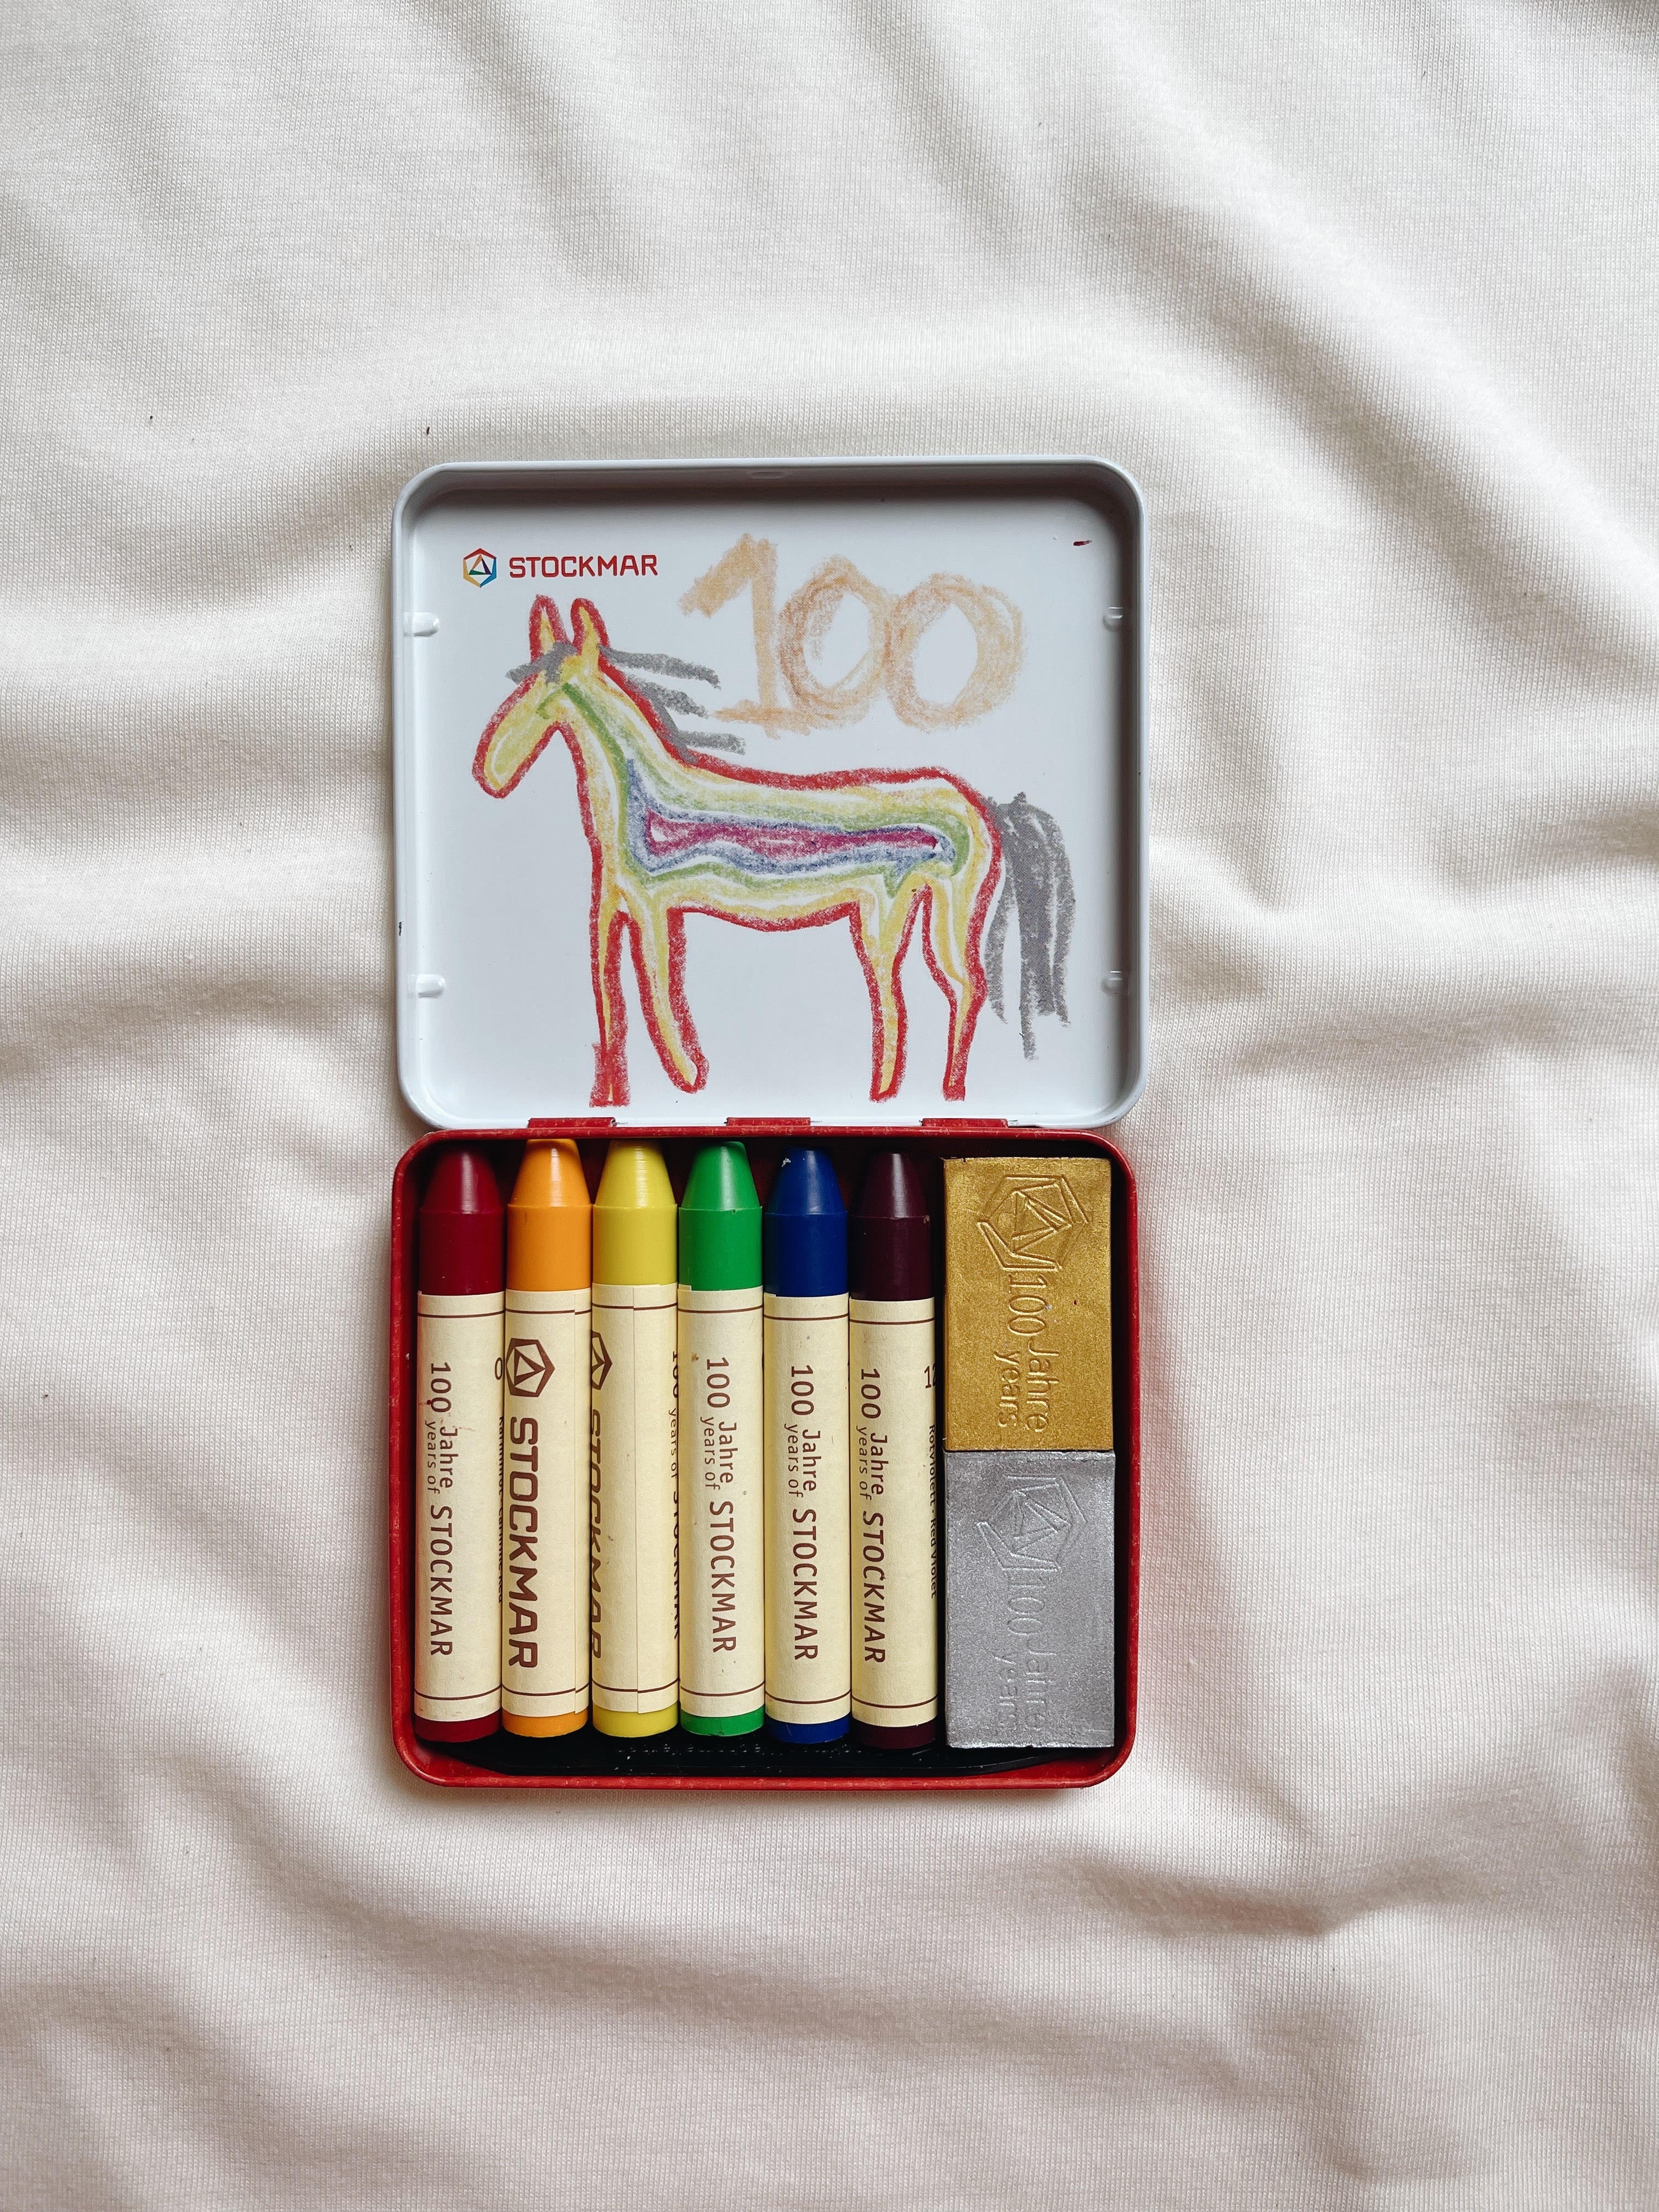 Stockmar "Rainbow" Crayons